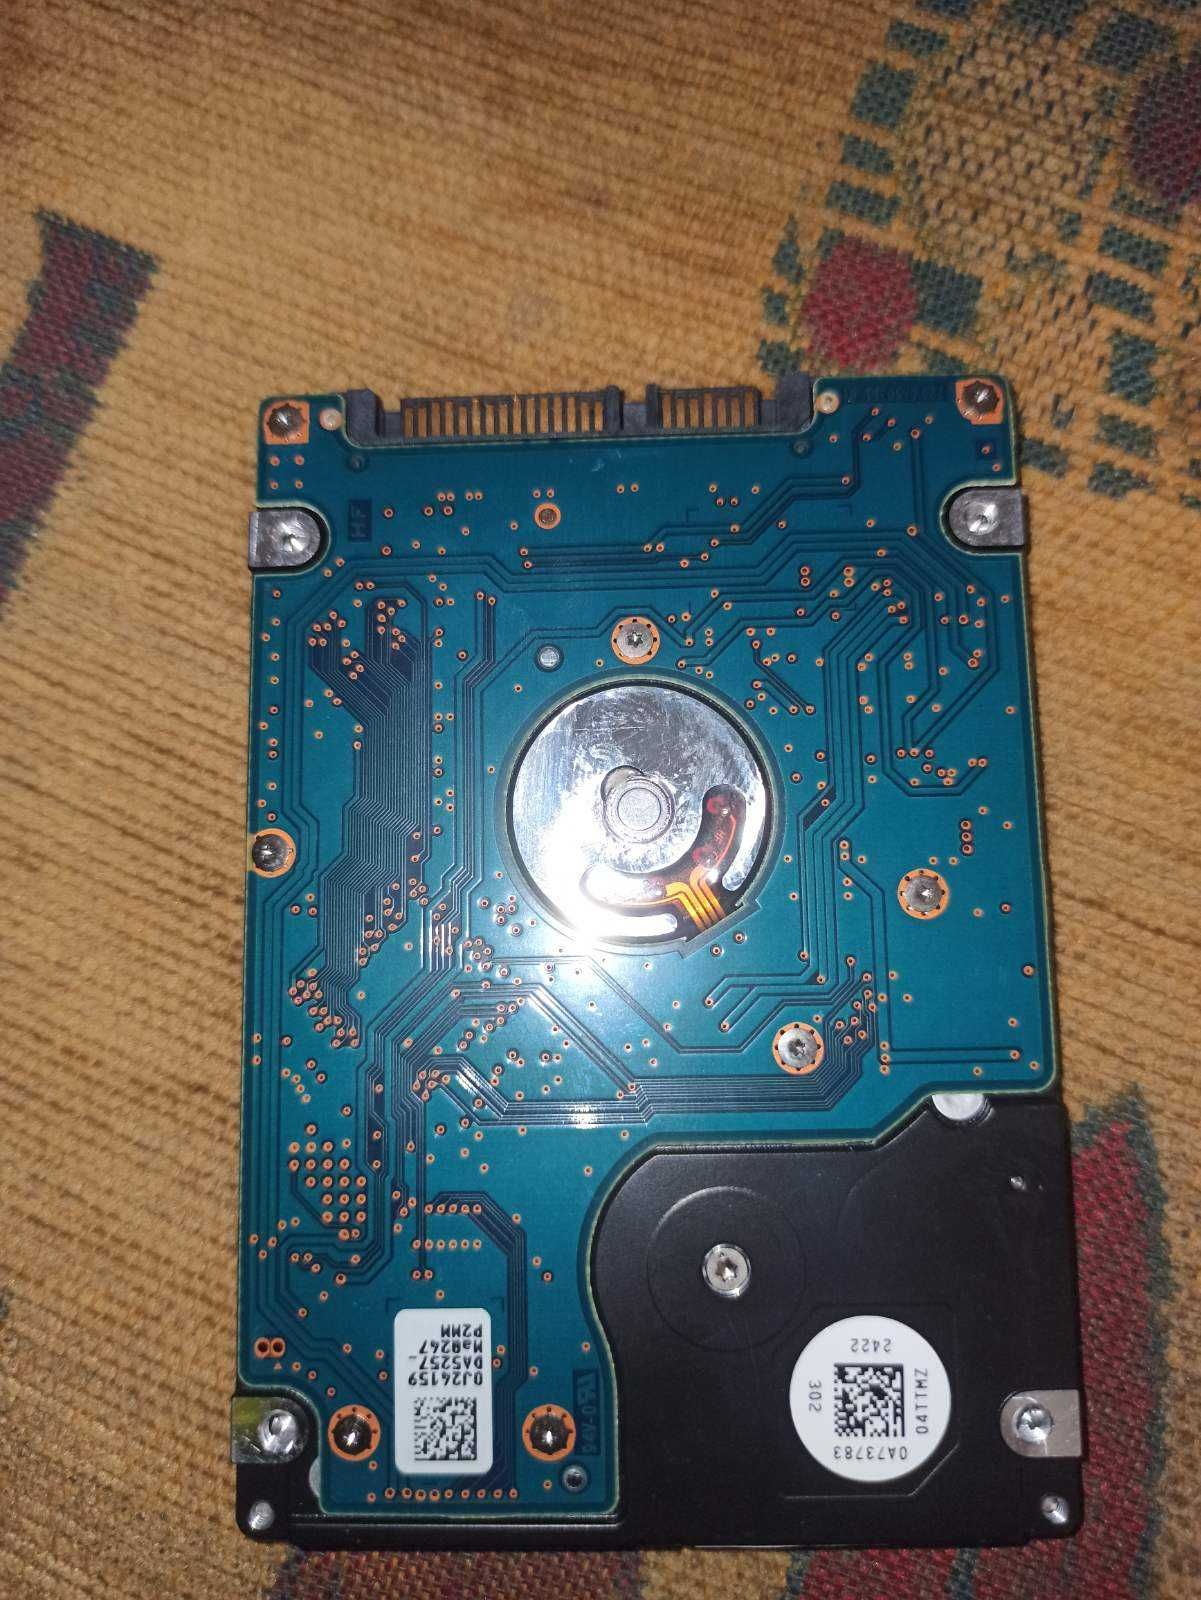 Жорсткий диск для ноутбука 2.5" 500GB Z5K500-500 (HTS545050A7E300)